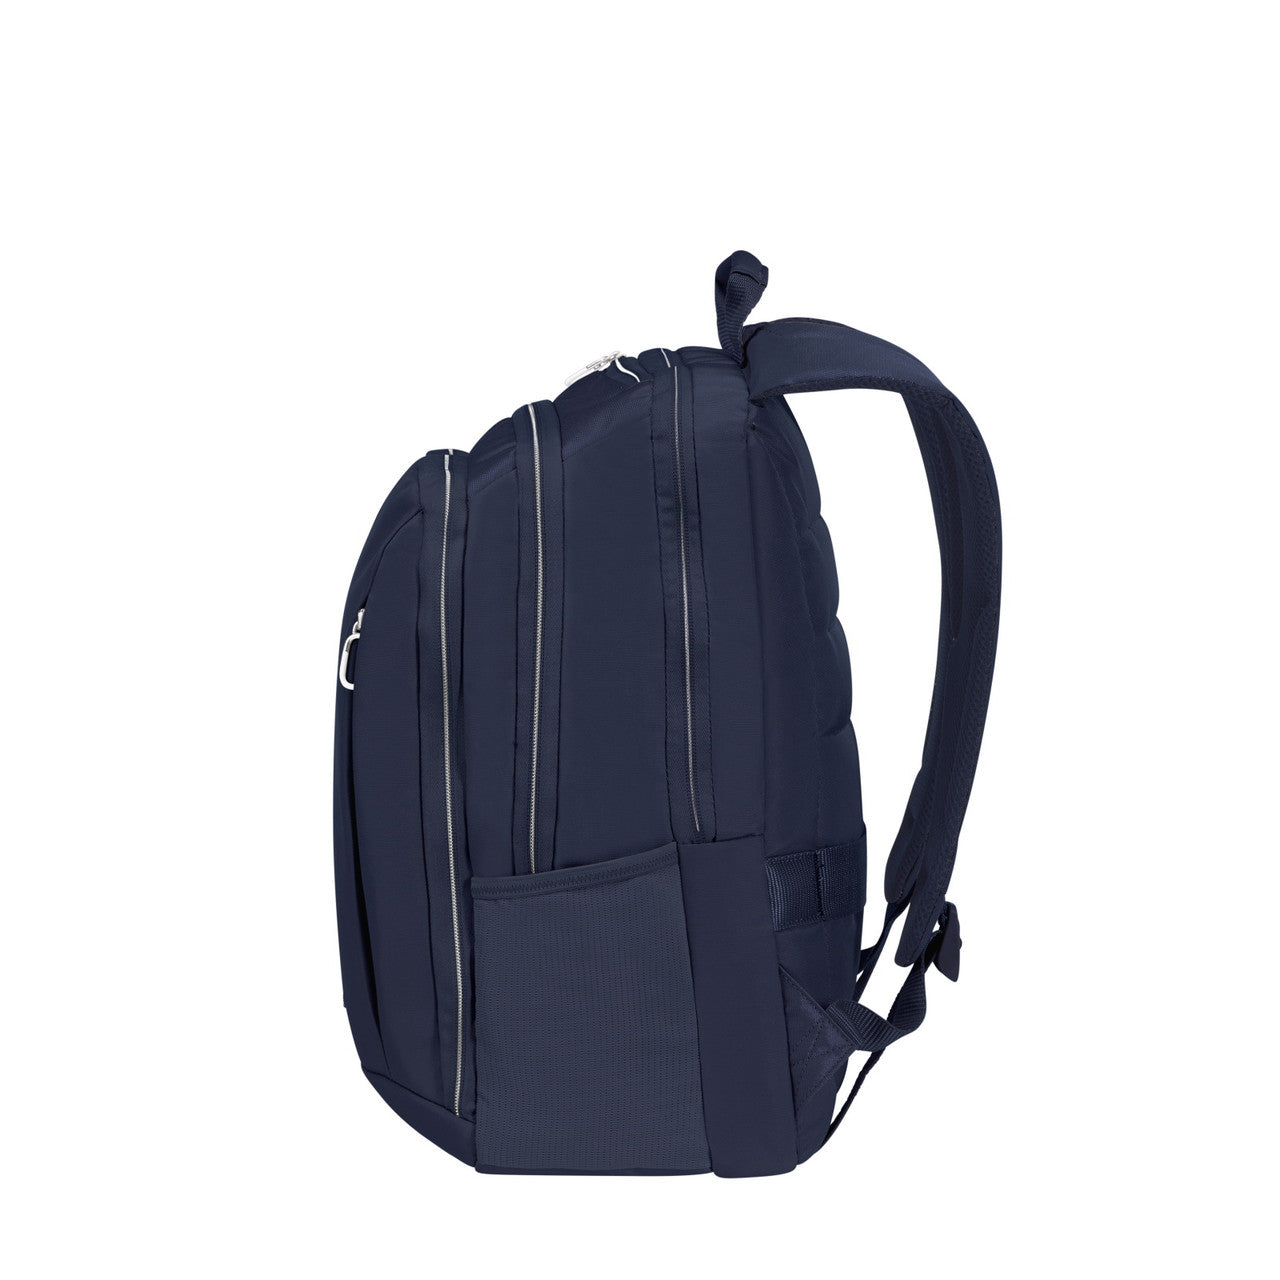 Samsonite - GUARDIT CLASSY 15.6in Backpack - MIDNIGHT BLUE-4